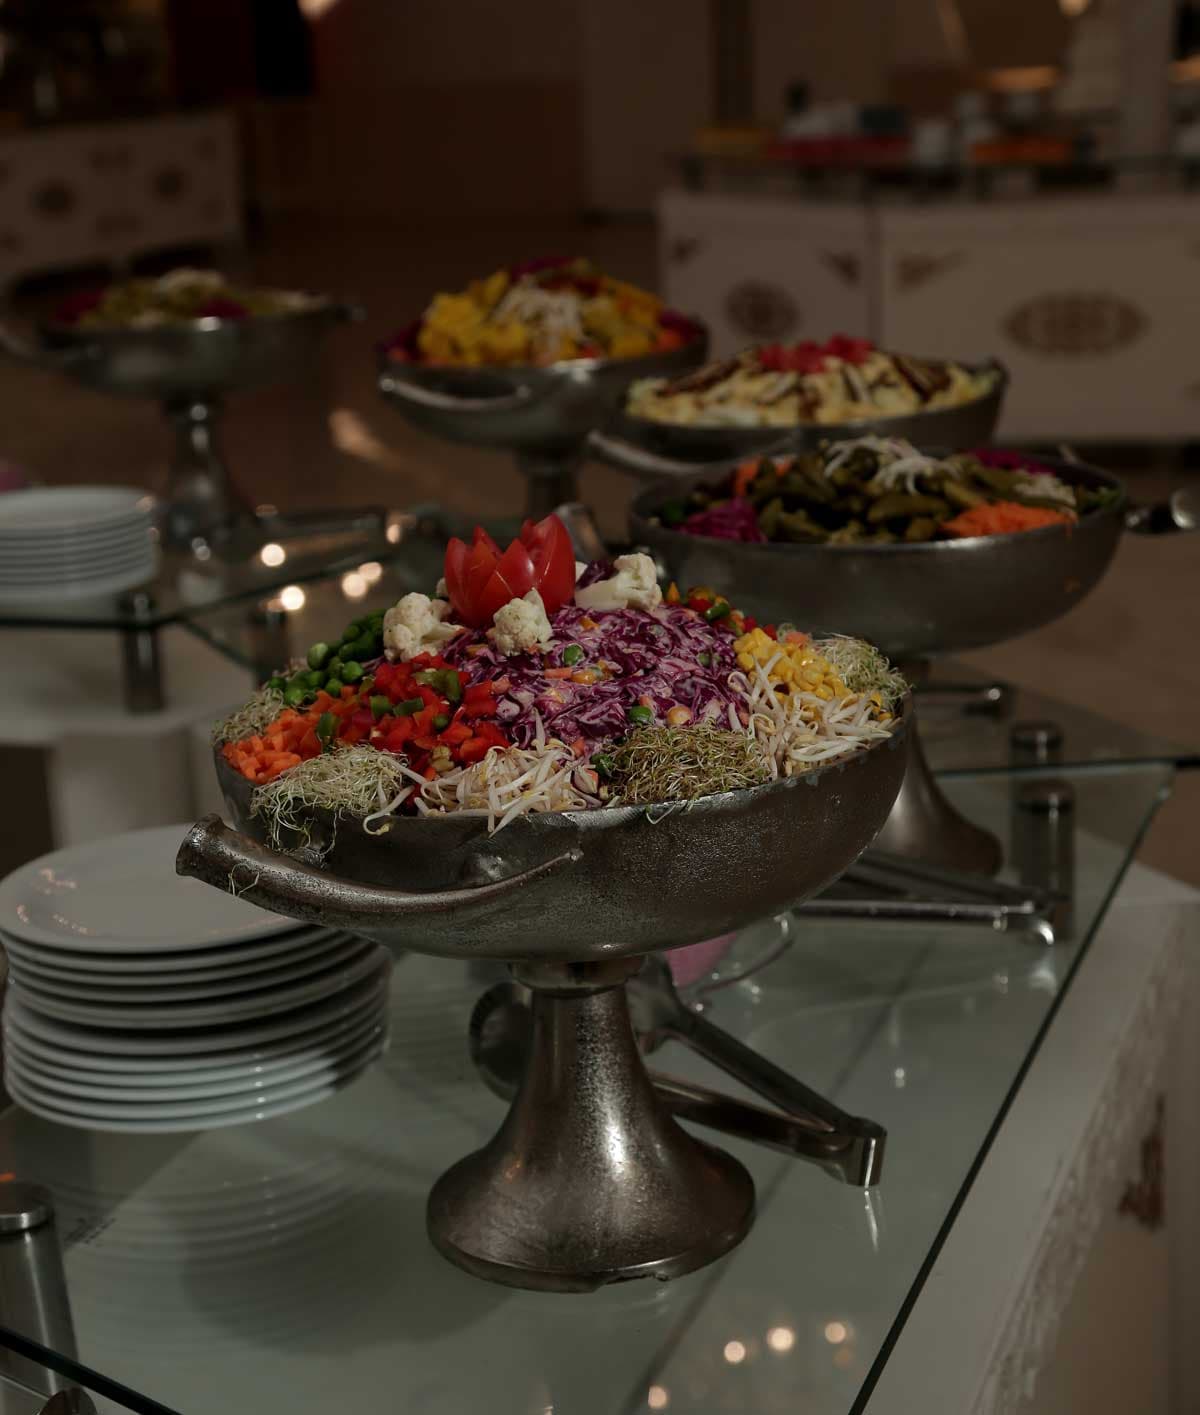 Persian salad and dessert